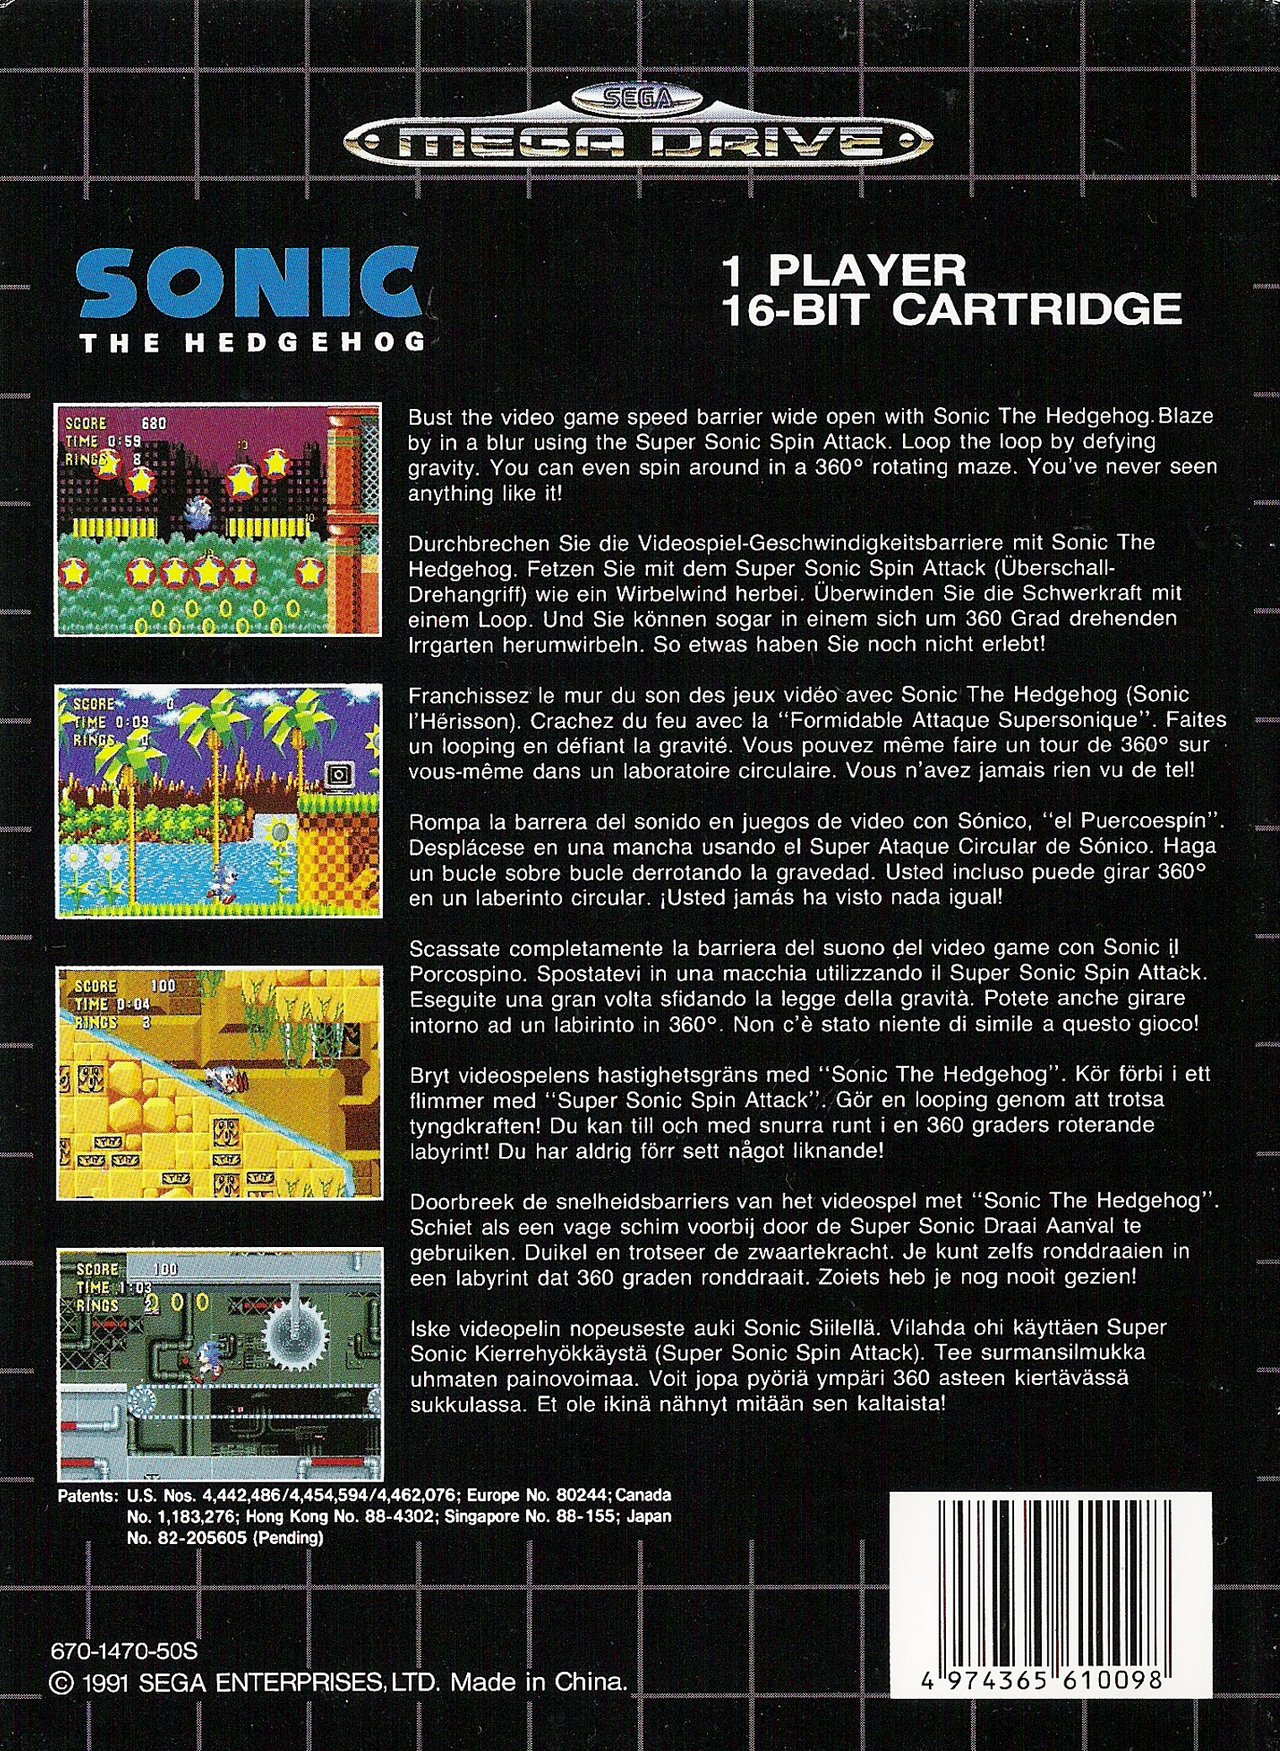 ▷ Play Sonic the Hedgehog Online FREE - Sega Genesis (Mega Drive)